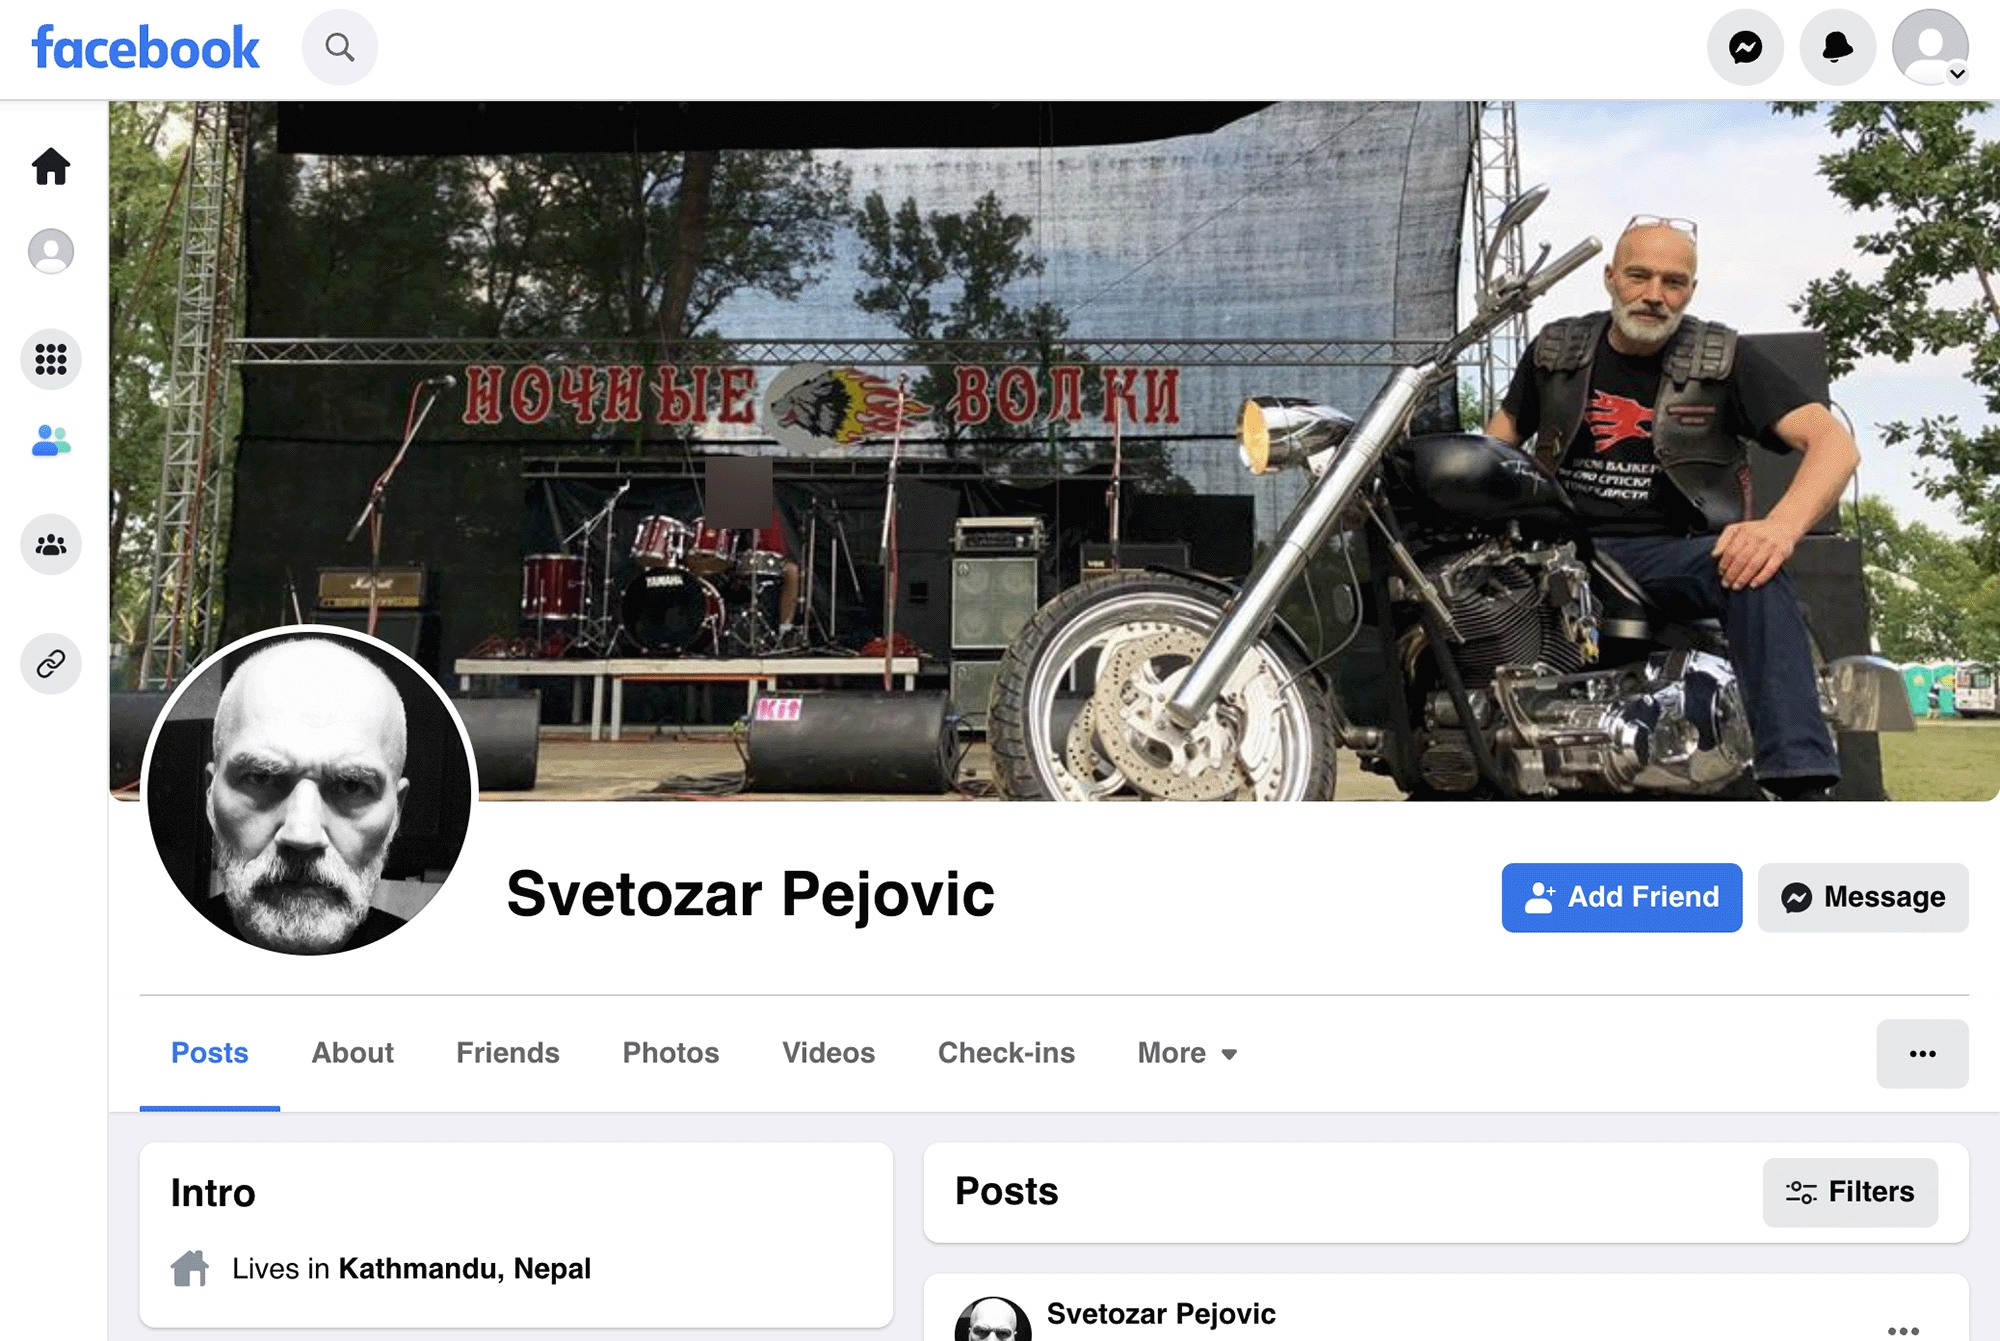 The Facebook profile page of Svetozar Pejović (a.k.a. “Peja”).